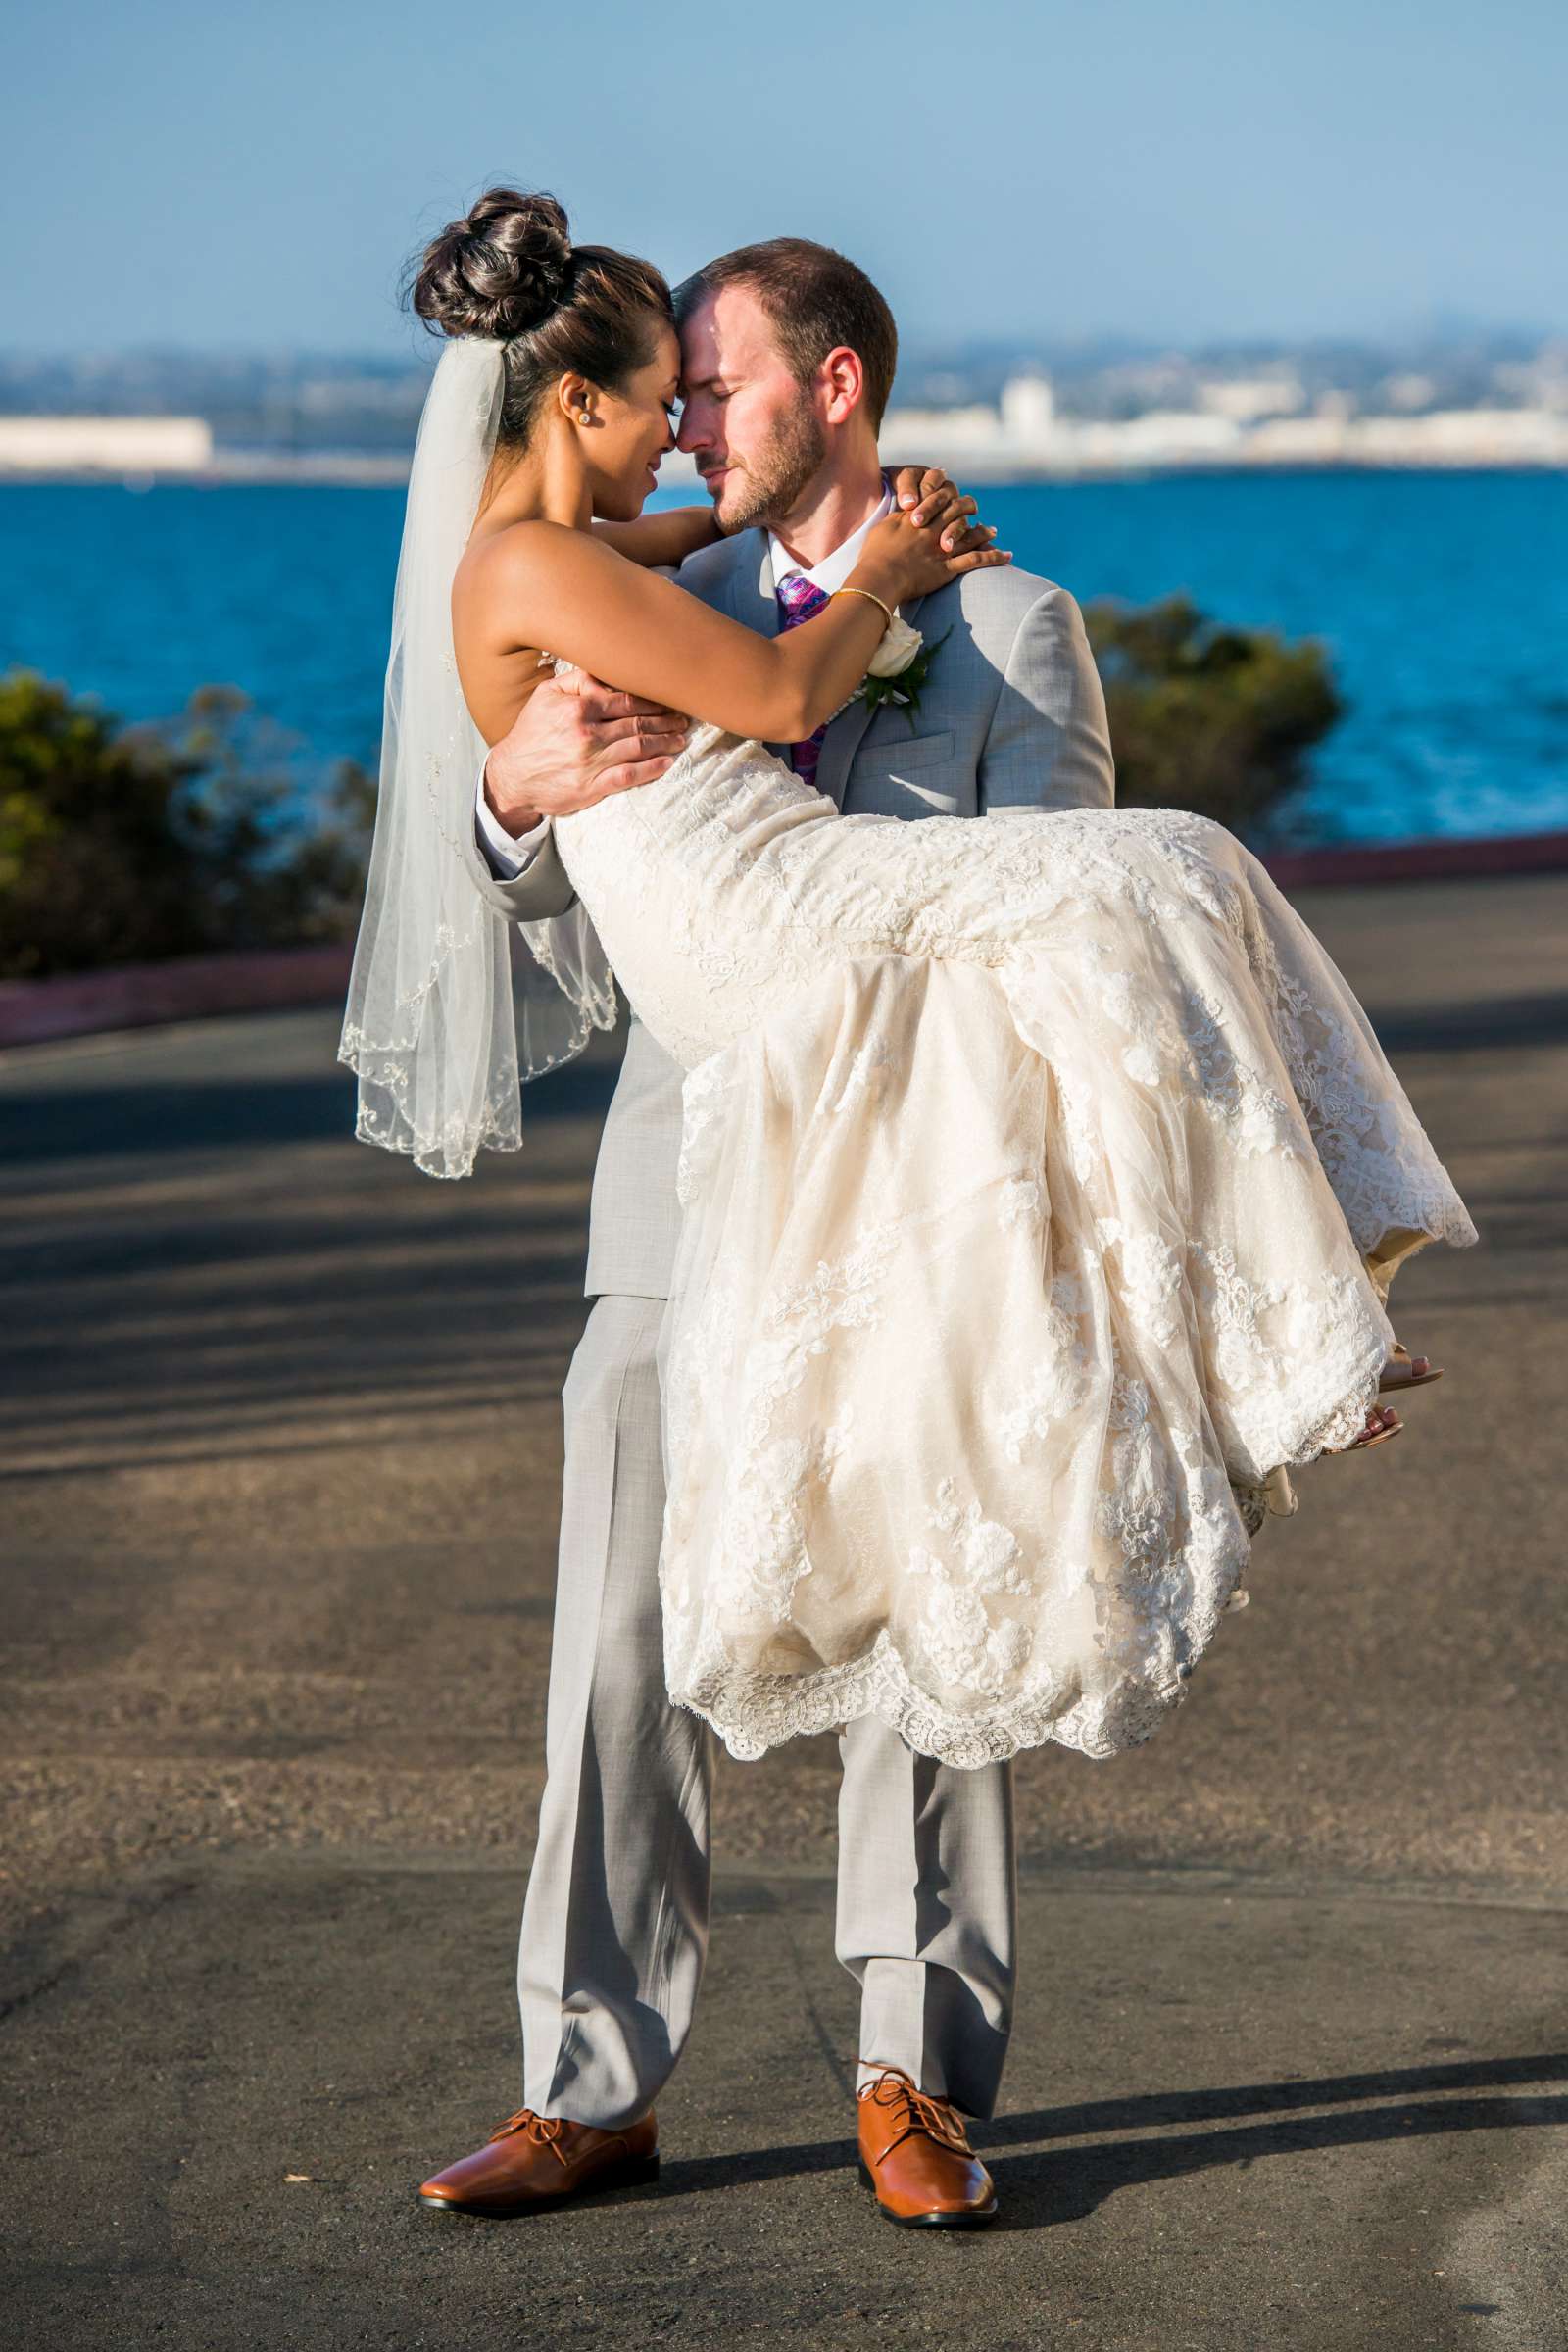 Loews Coronado Bay Resort Wedding coordinated by Sweet Blossom Weddings, Hijschen and Robert Wedding Photo #10 by True Photography